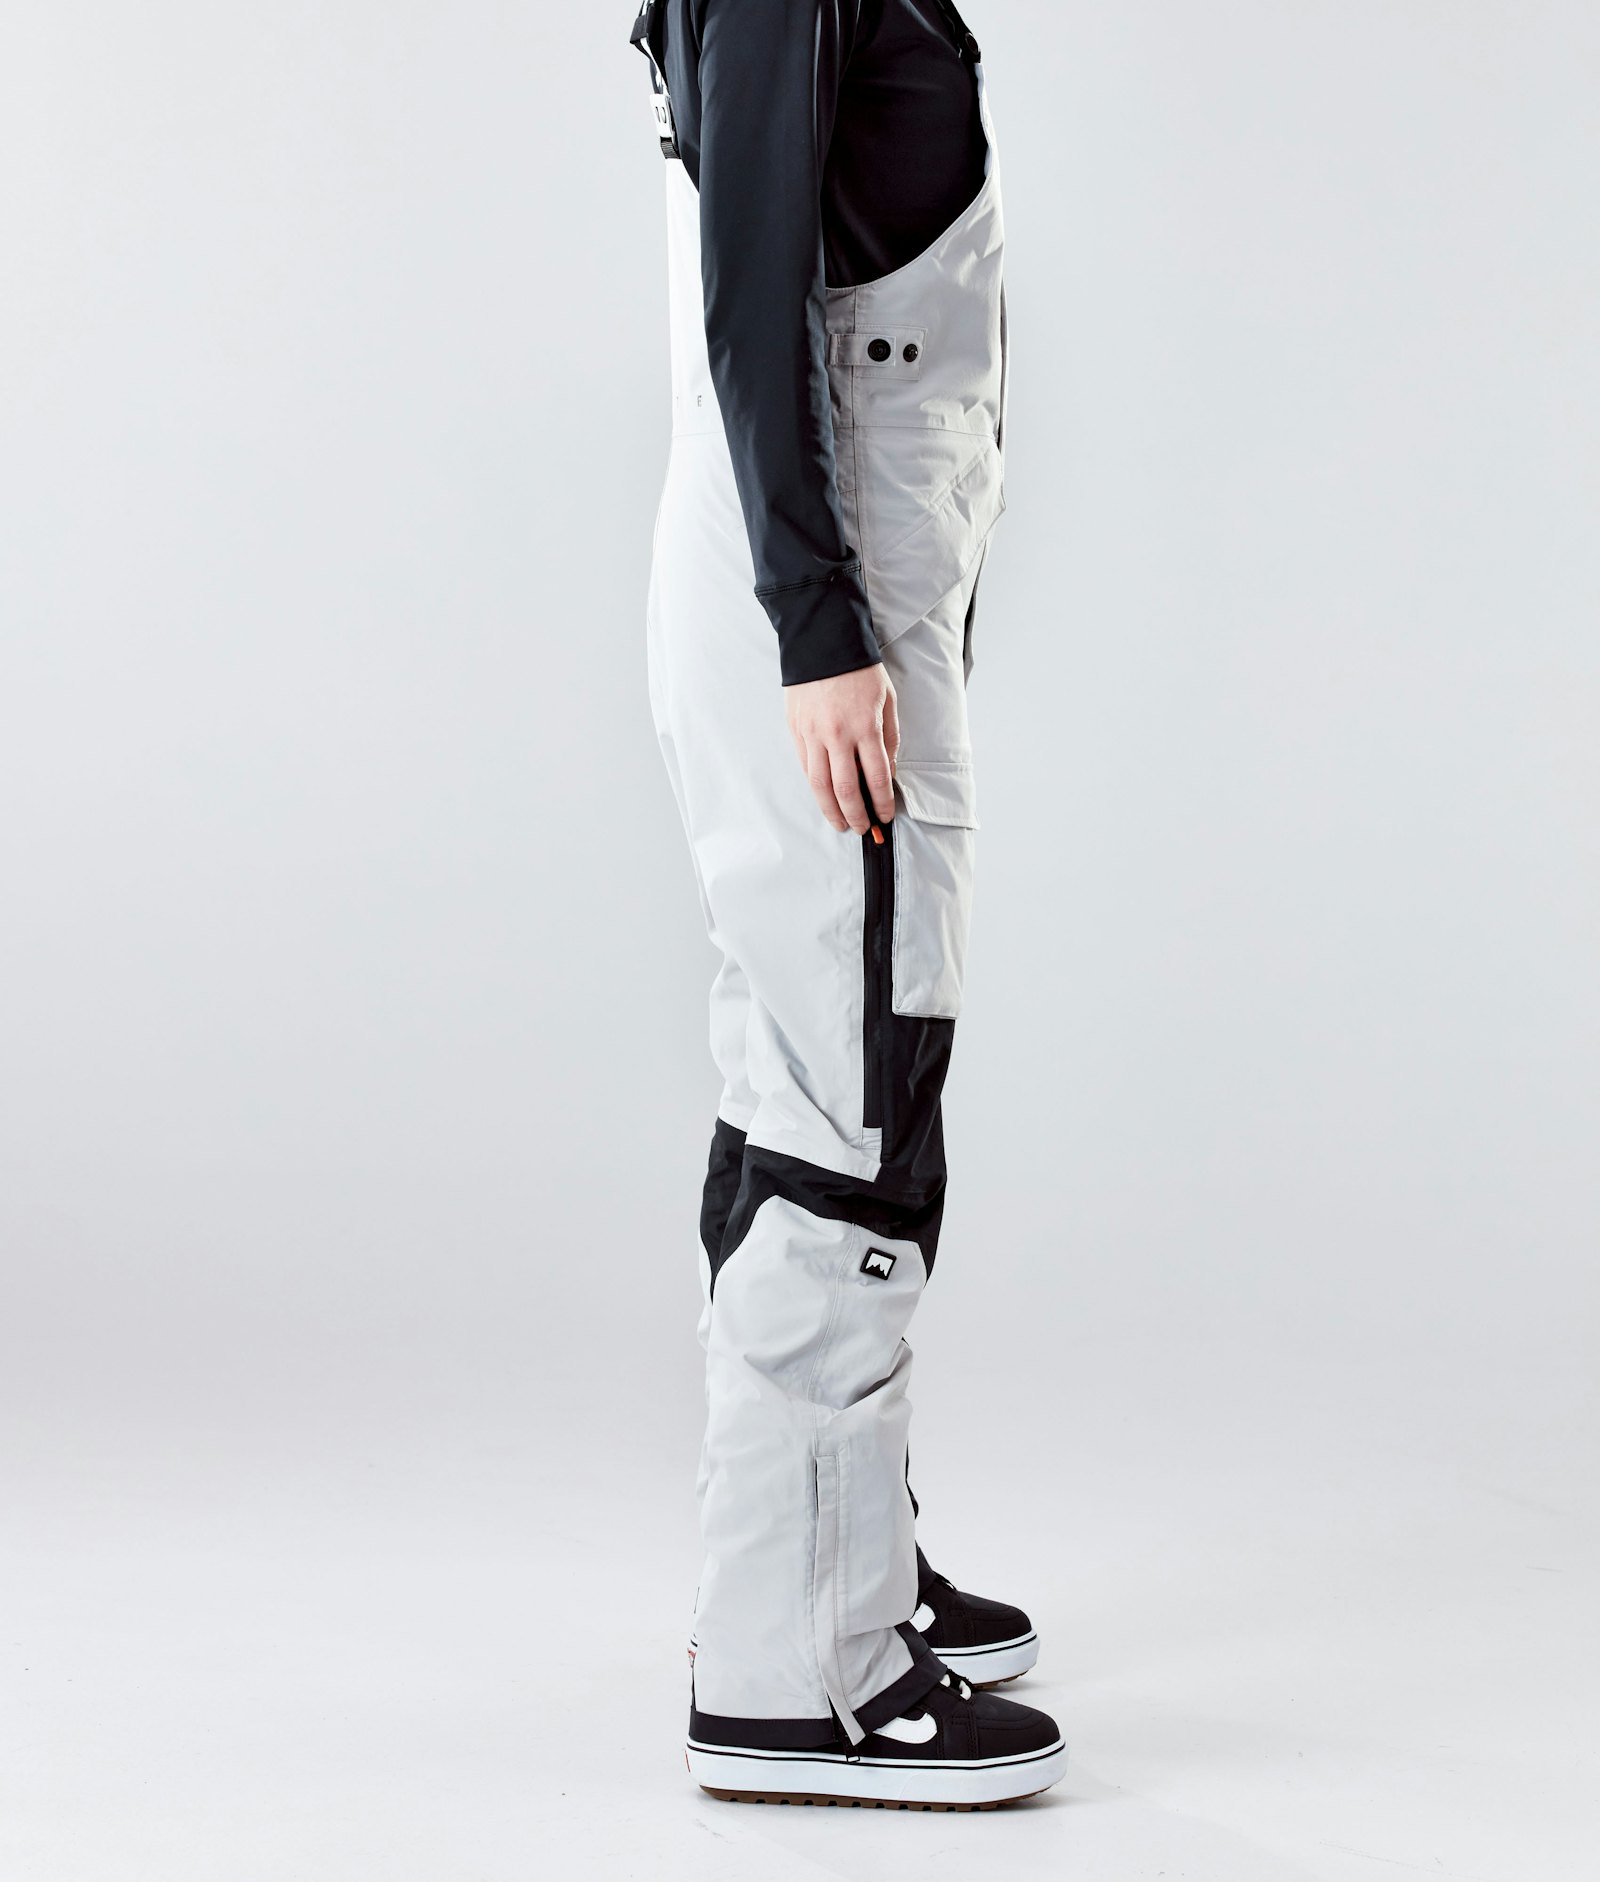 Montec Fawk W 2020 Pantalon de Snowboard Femme Light Grey/Black